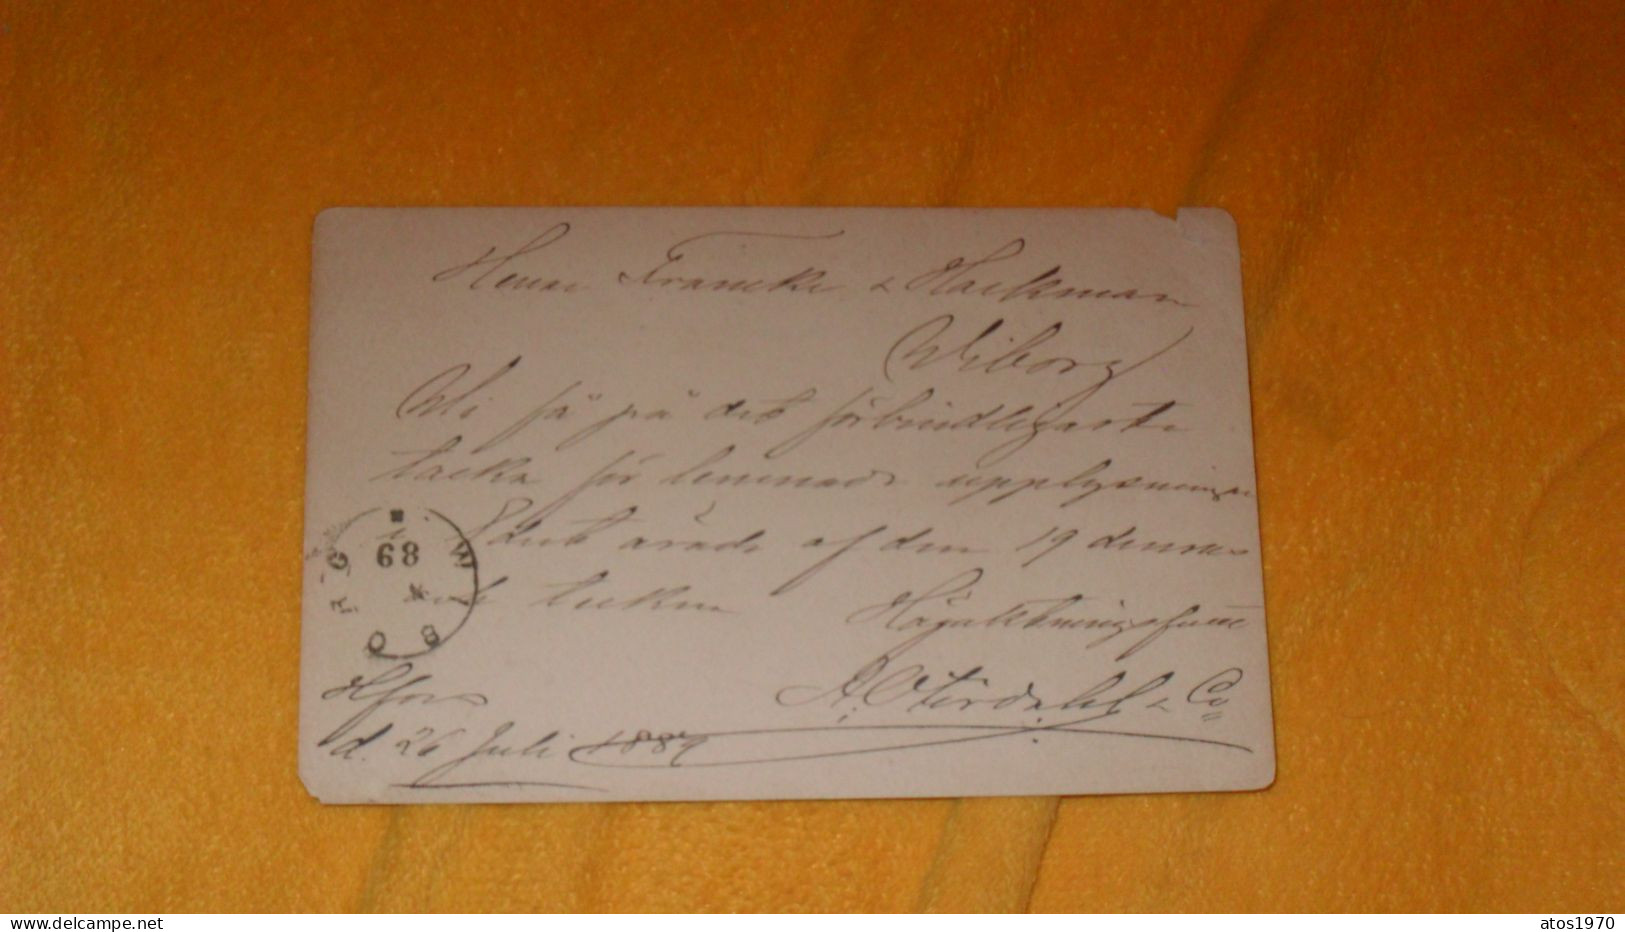 CARTE POSTALE ANCIENNE DE 1889../ FINLANDE A. OTERDAHL & Co..BYGGNADSMATERIALIER HELSINGFORS HELSINHKI..CACHET + TIMBRE - Briefe U. Dokumente